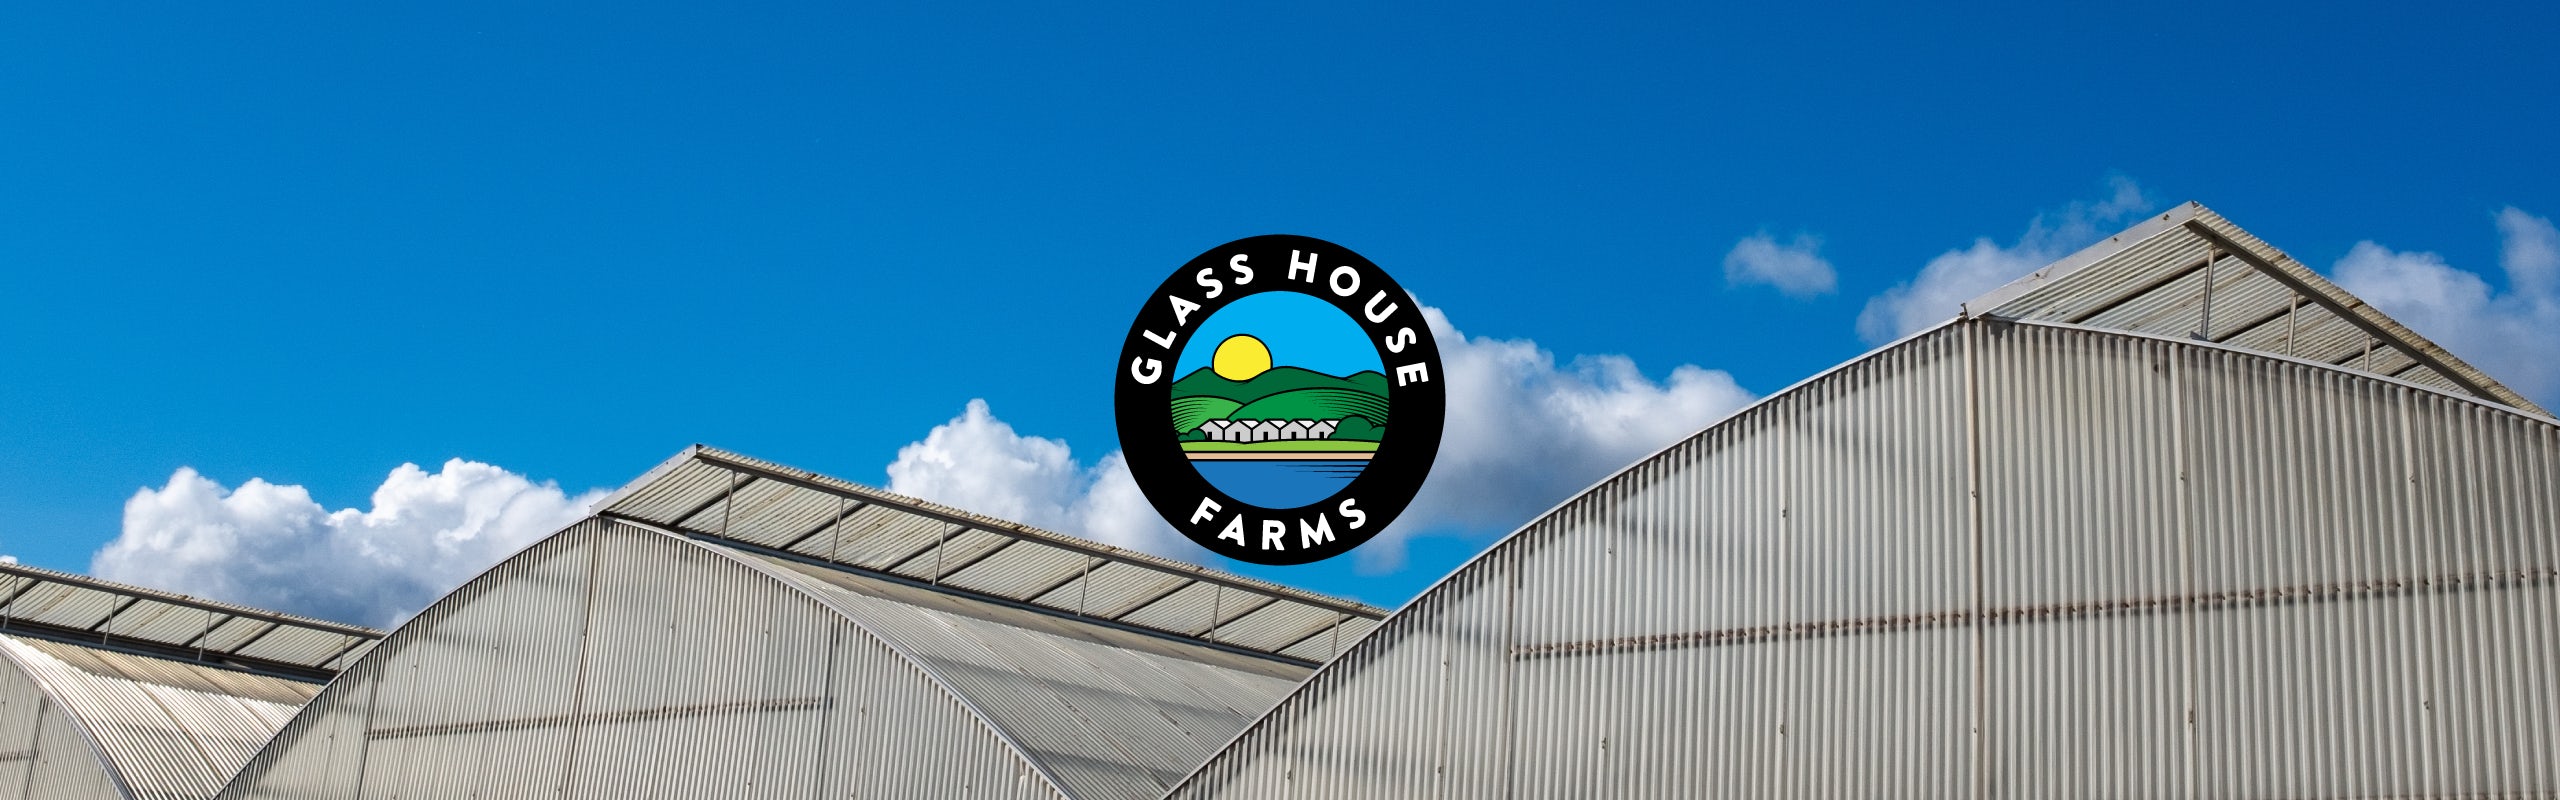 Glass House Farms banner